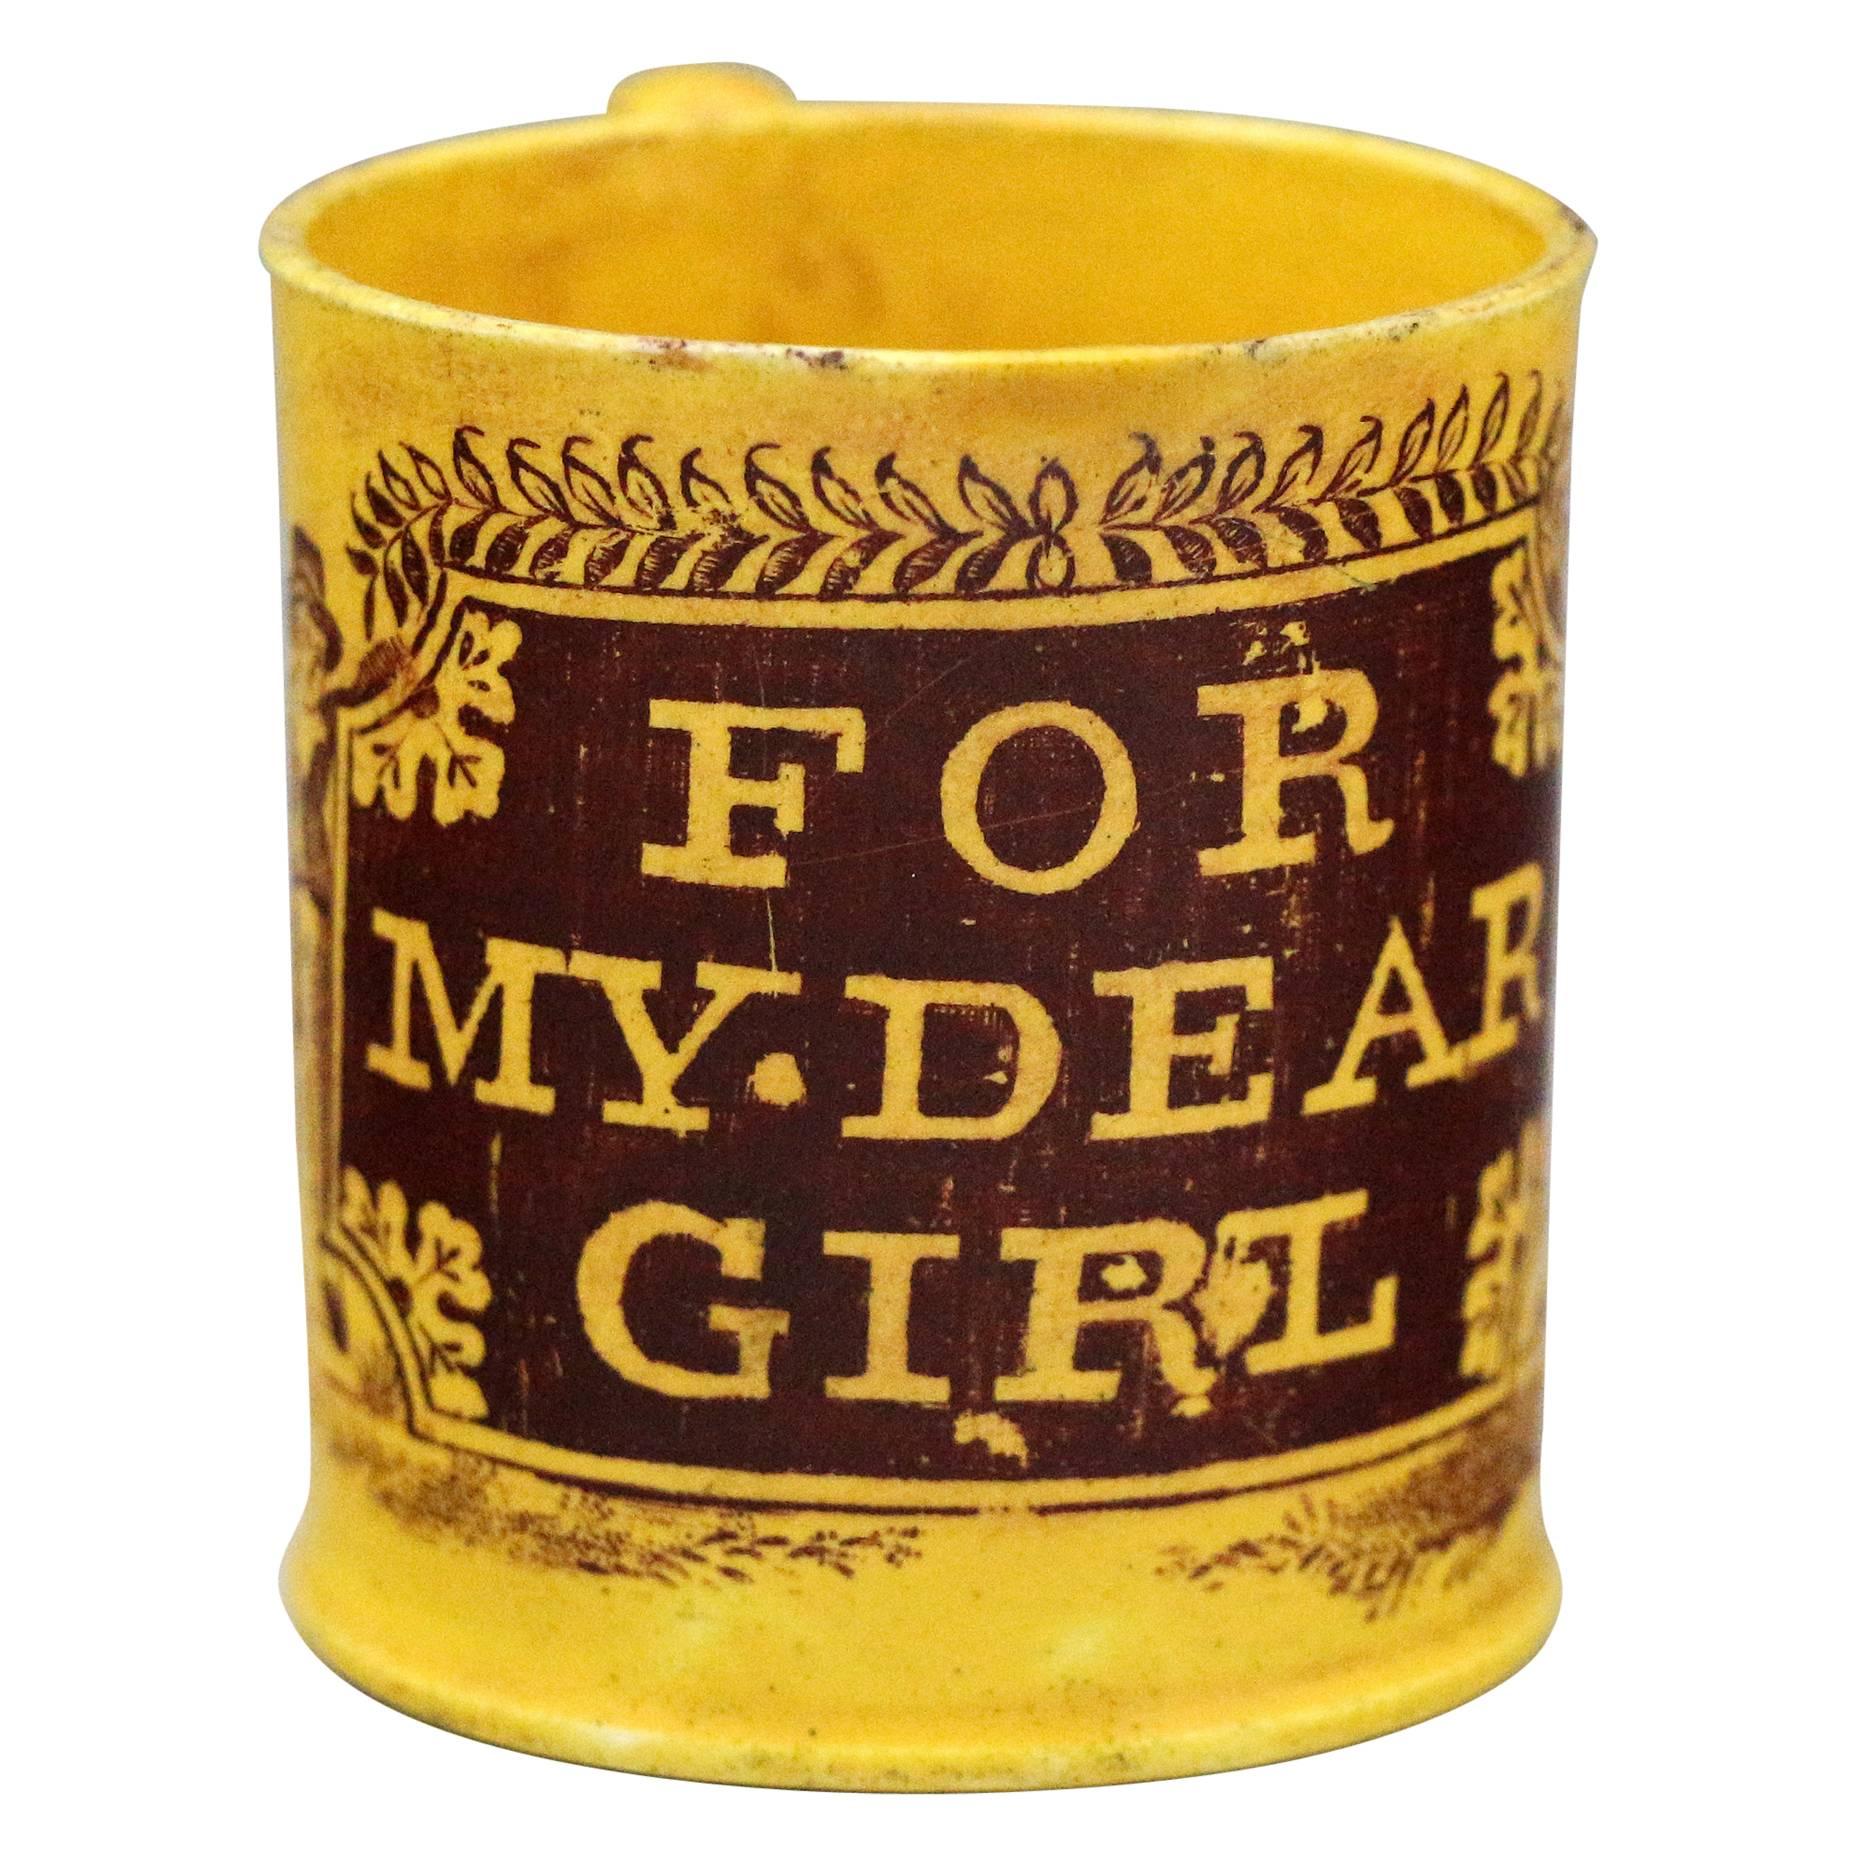 Canary Yellow Staffordshire Pottery Mug "For My Dear Girl"